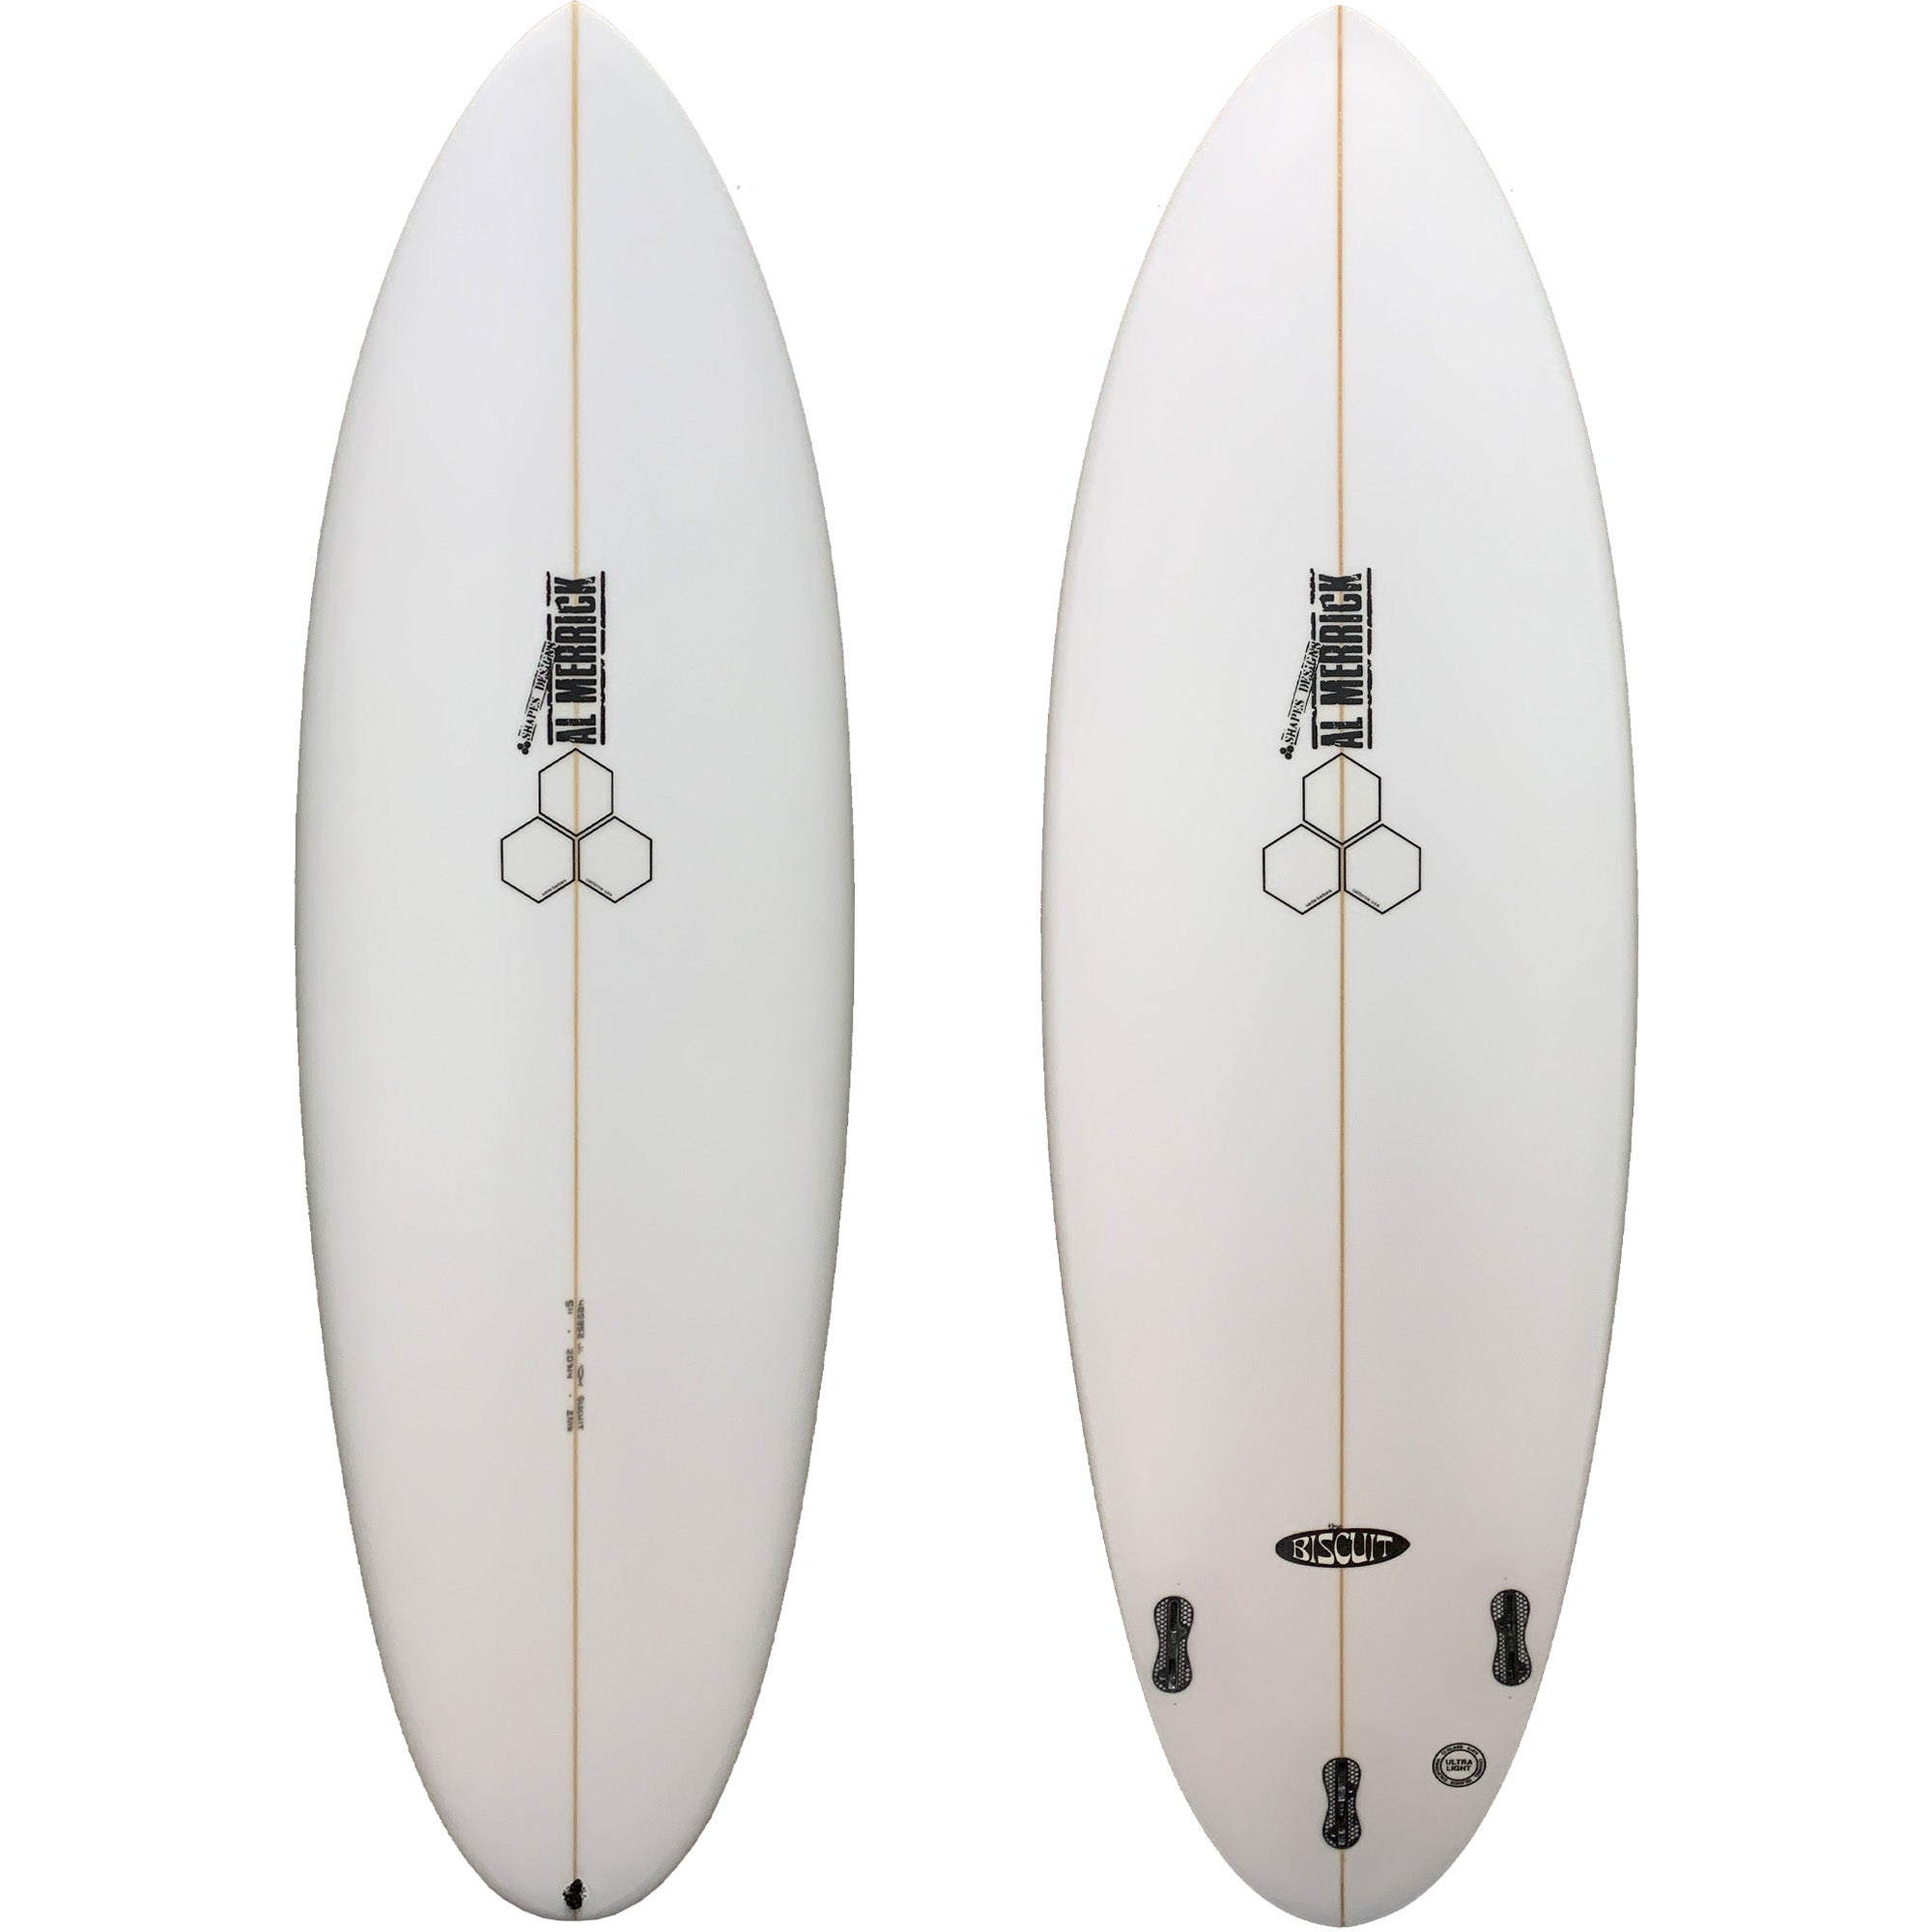 Channel Islands Biscuit Surfboard - FCS II